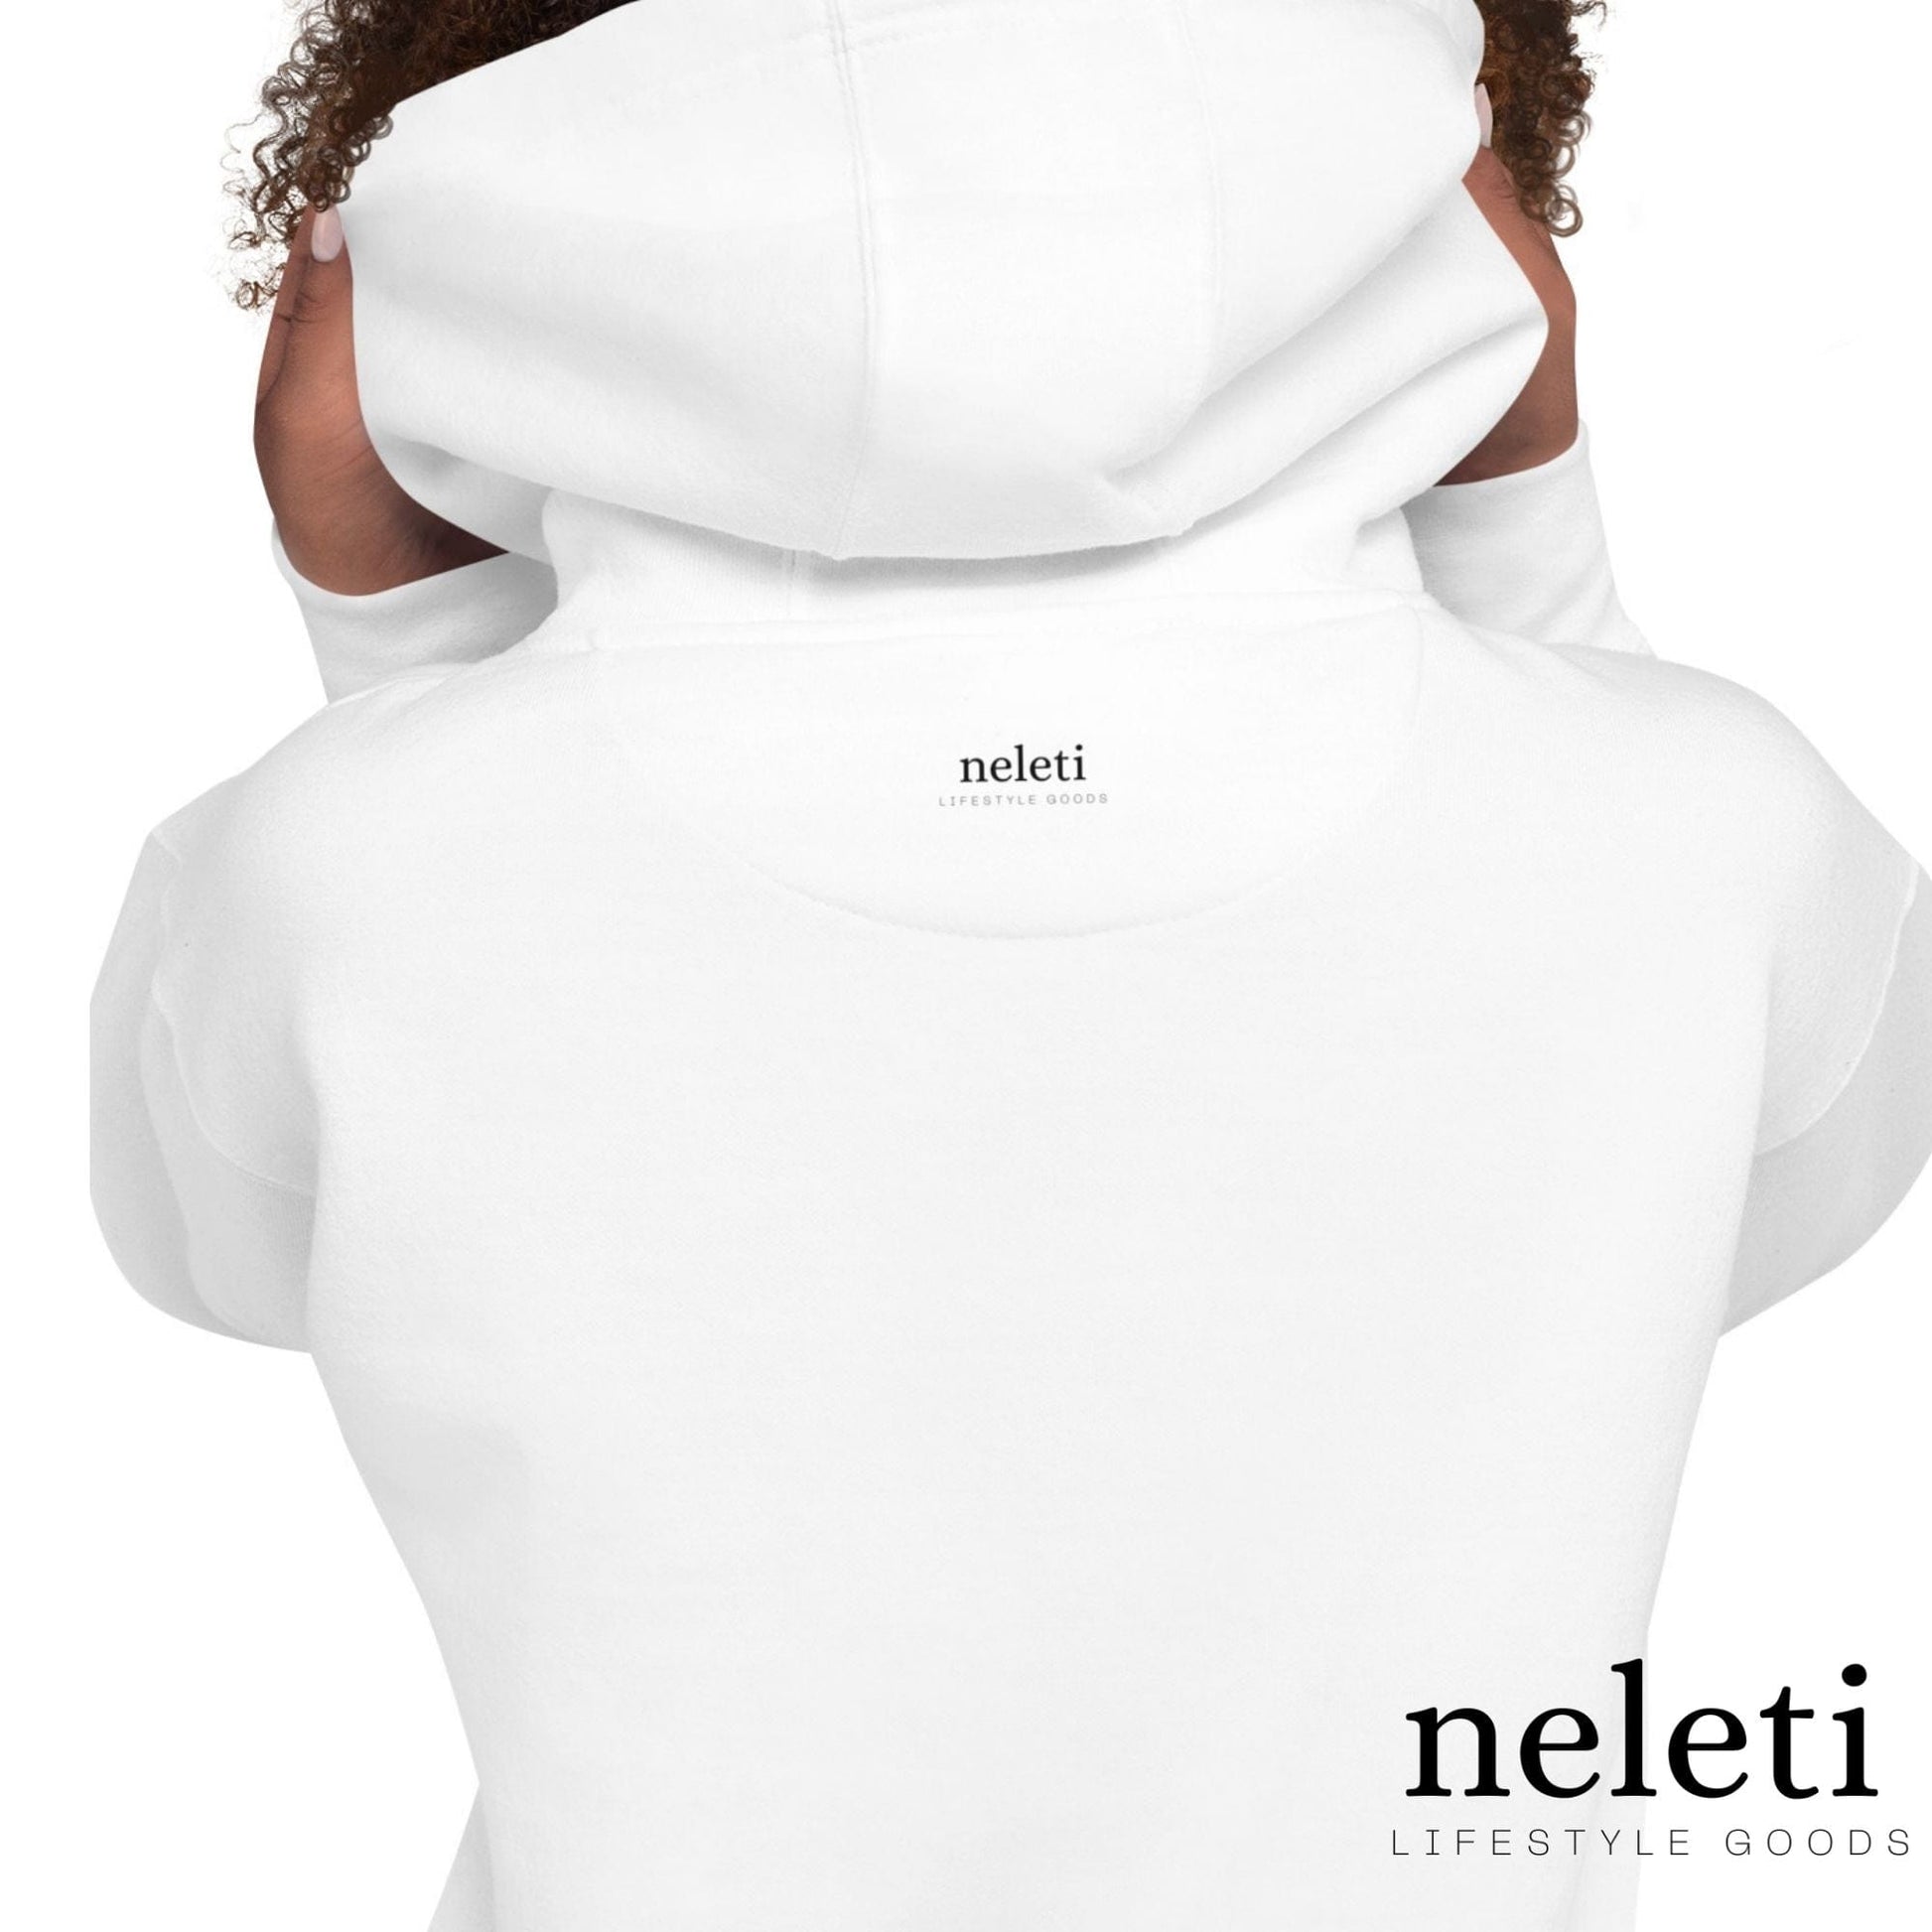 neleti.com-custom-white-hoodie-for-dog-lovers